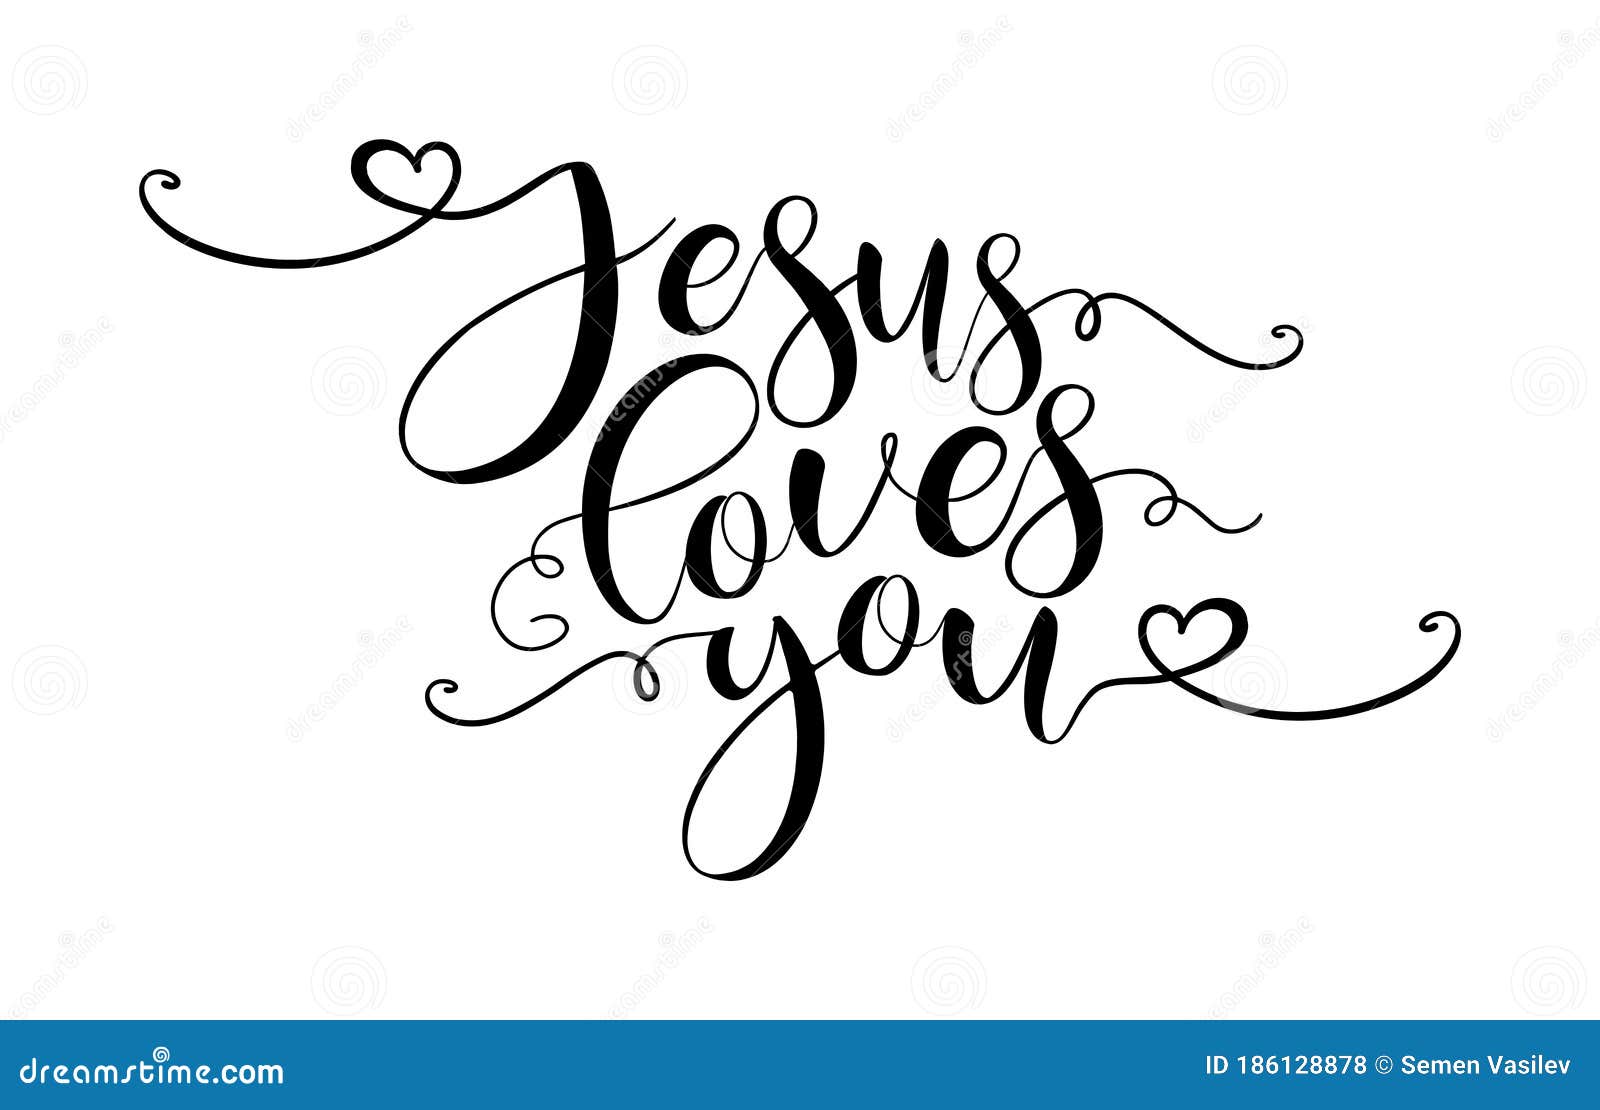 Jesus Loves You Bible Verse